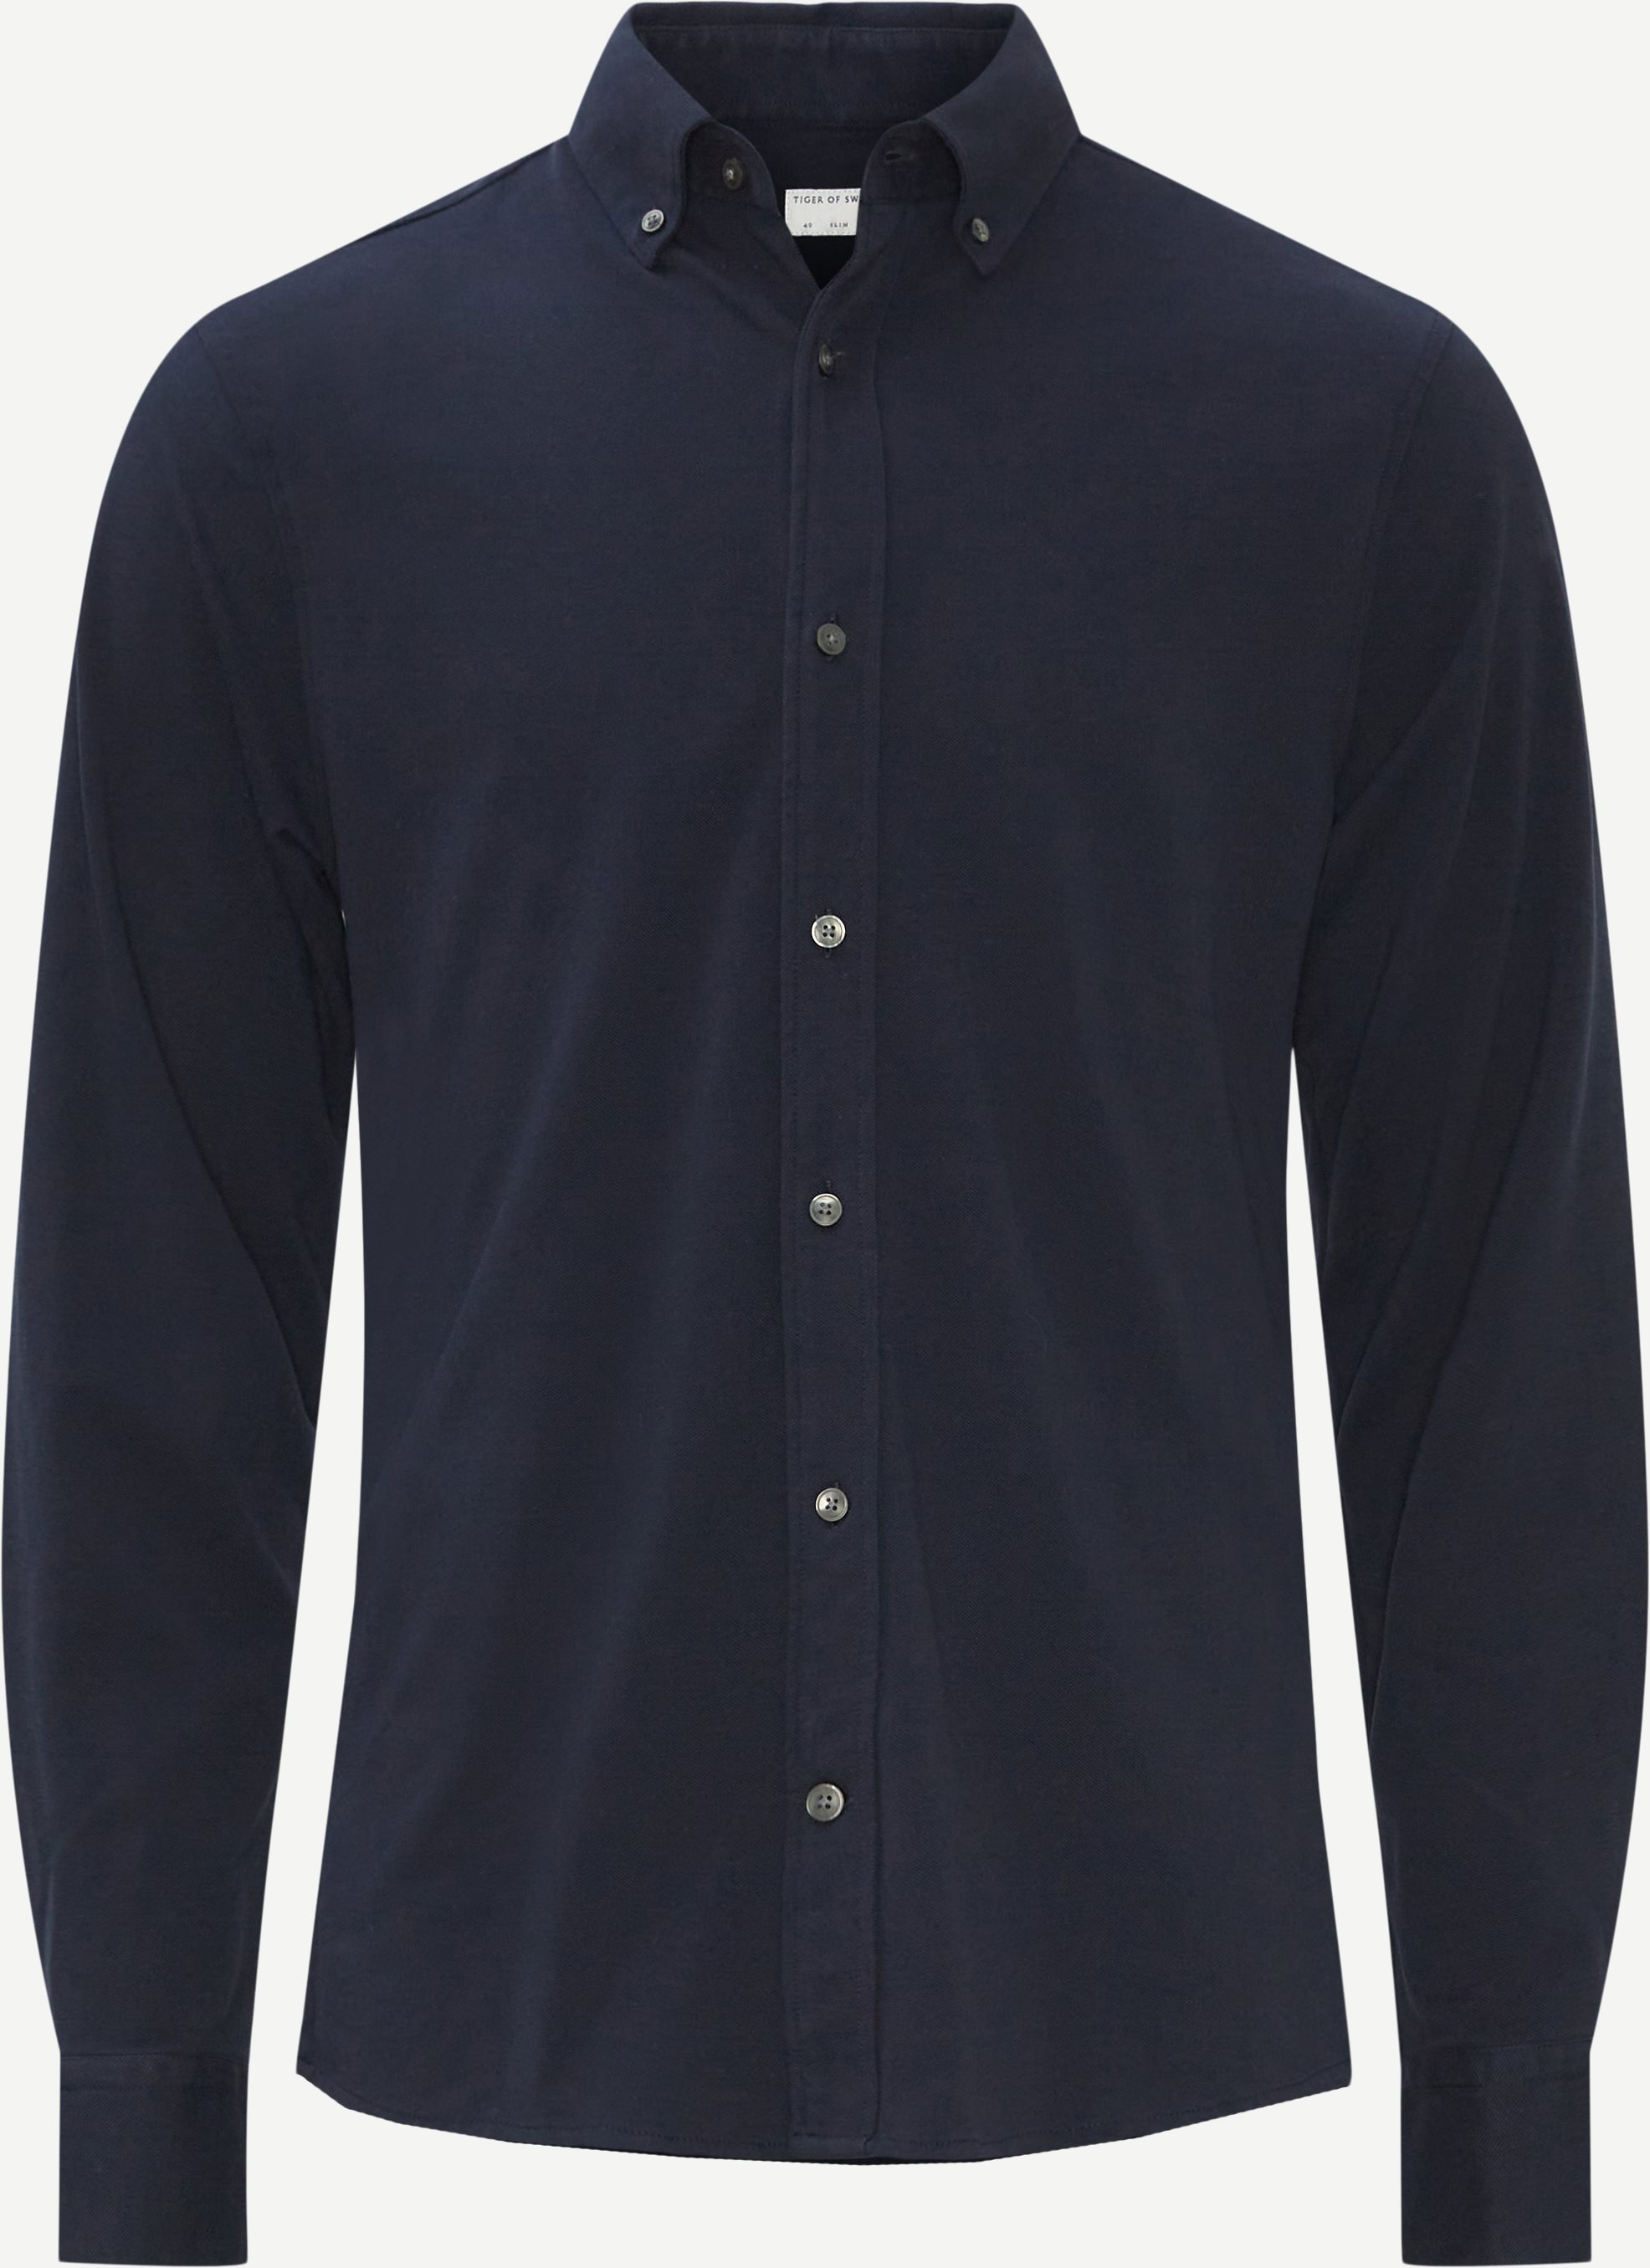 Fenald Jersey Skjorte - Skjorter - Regular fit - Blå